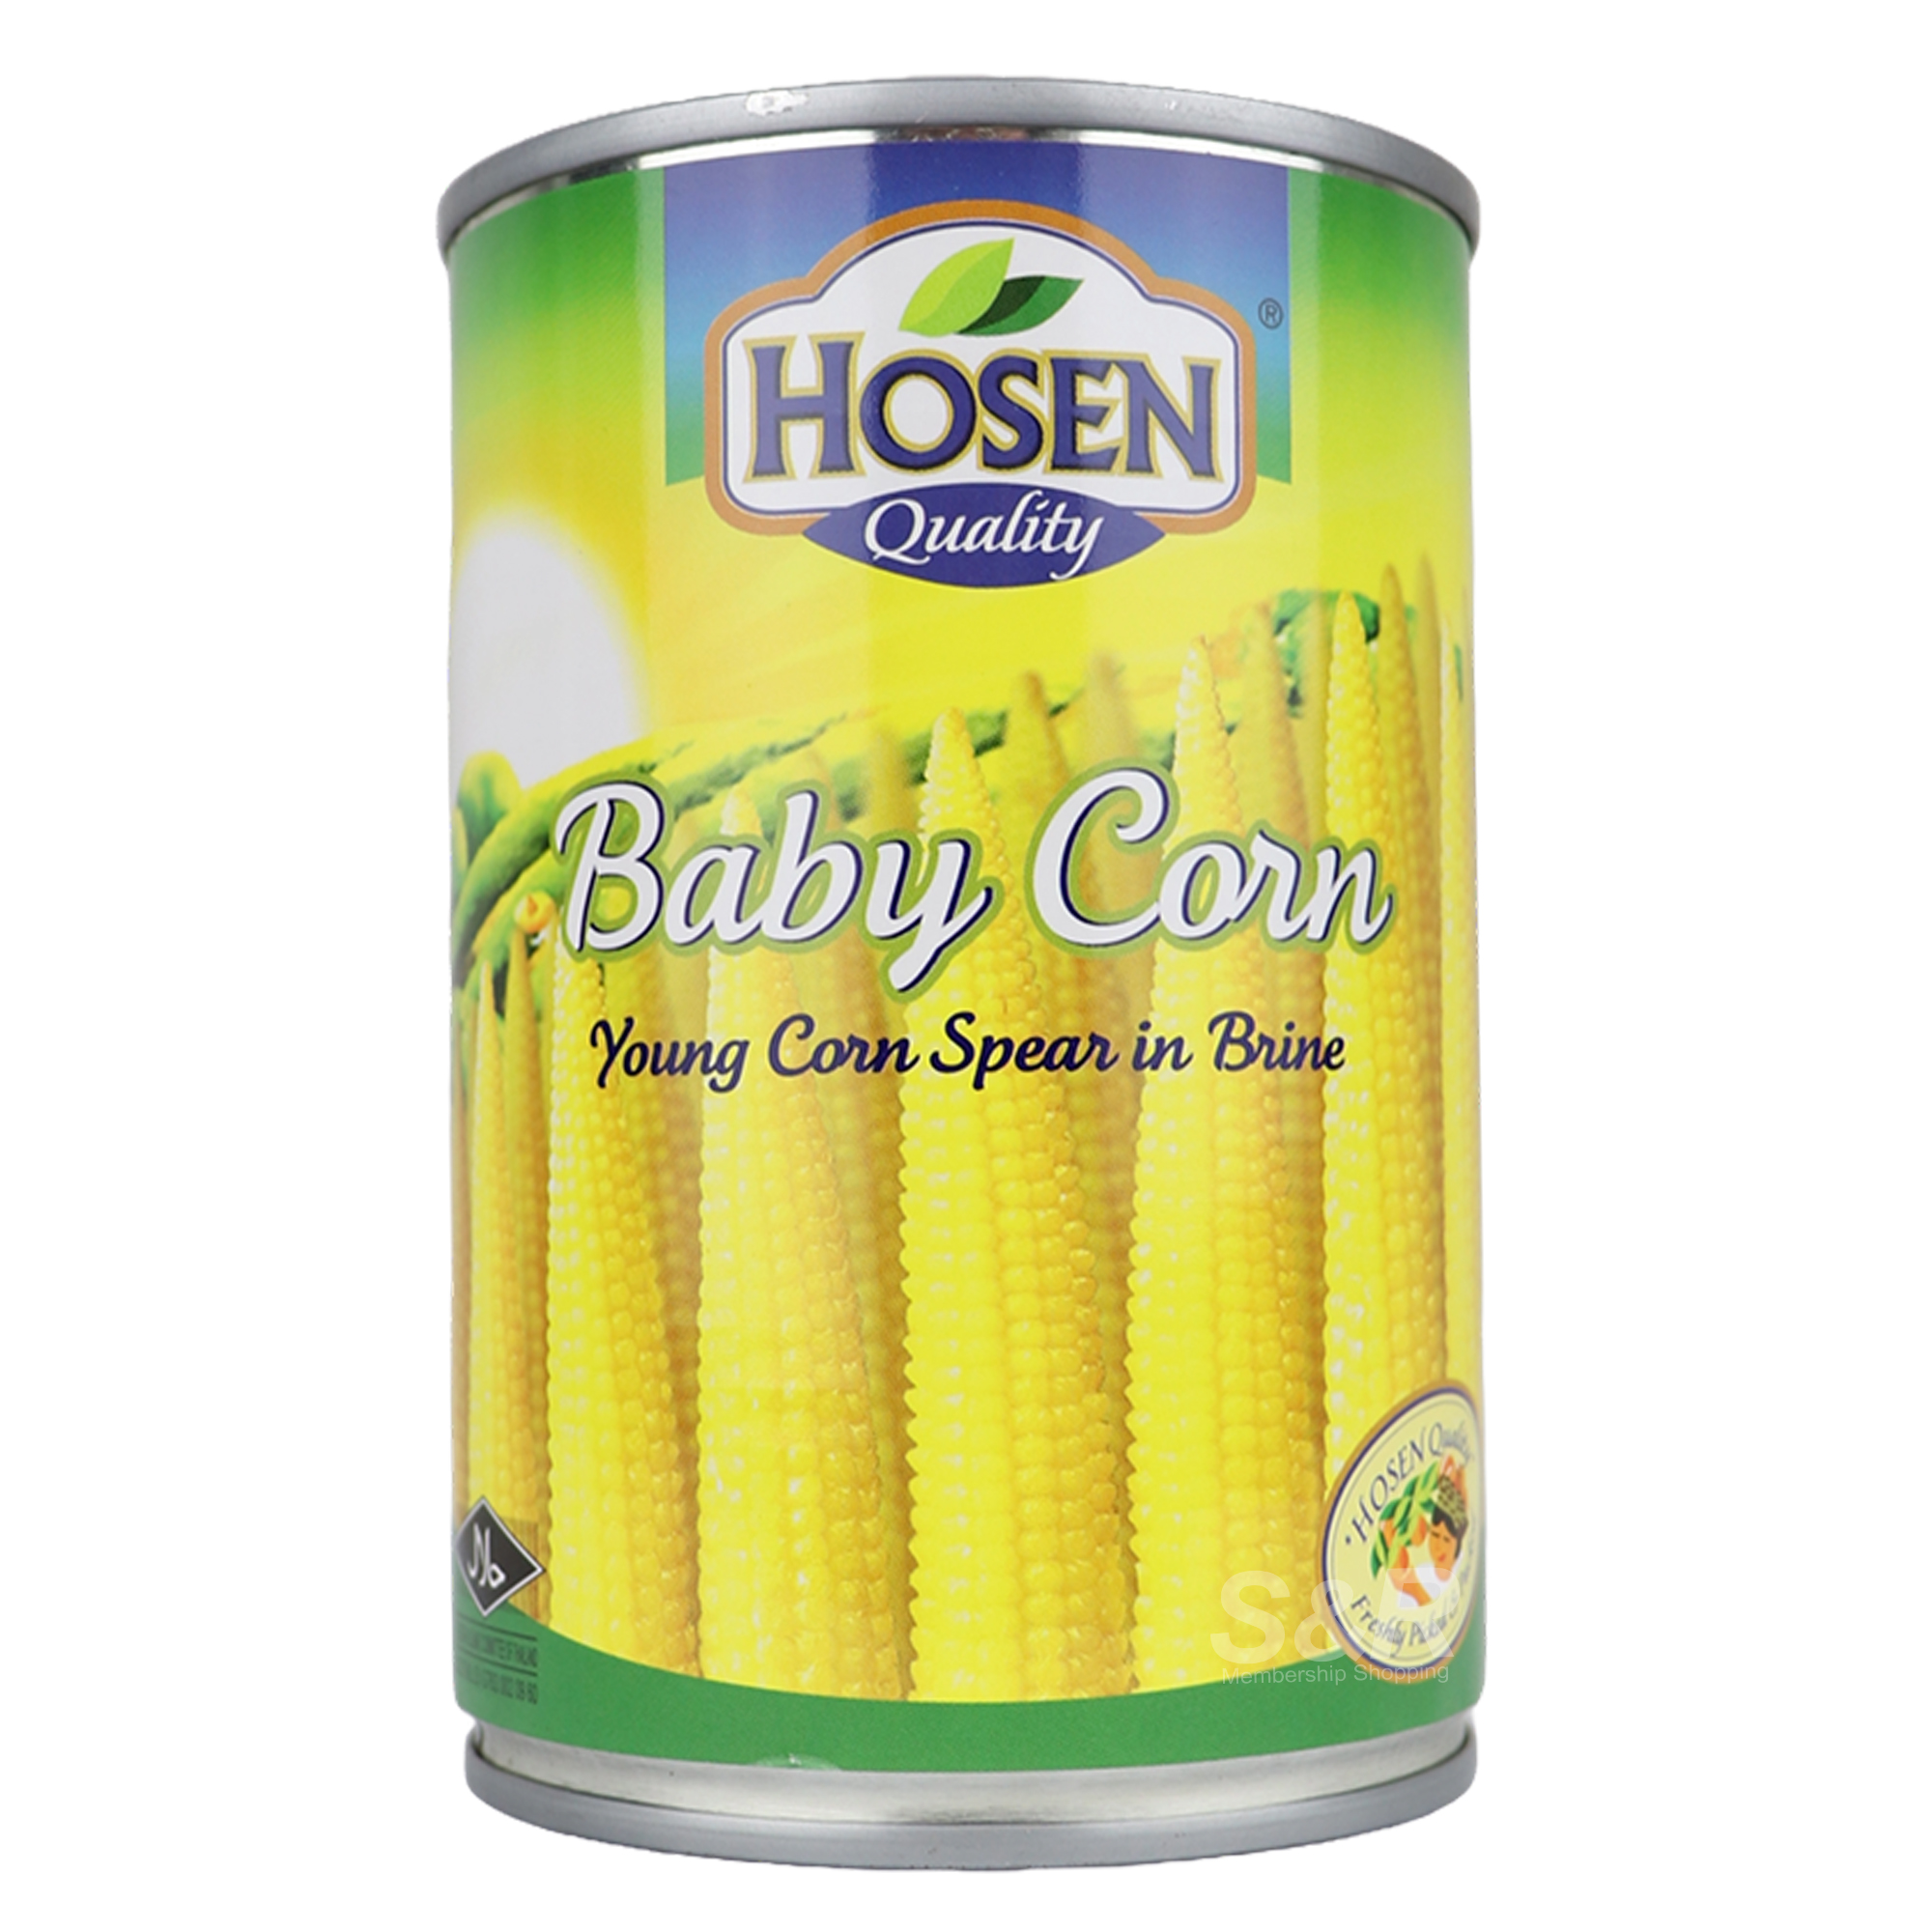 Hosen Quality Young Corn Spear in Brine 425g